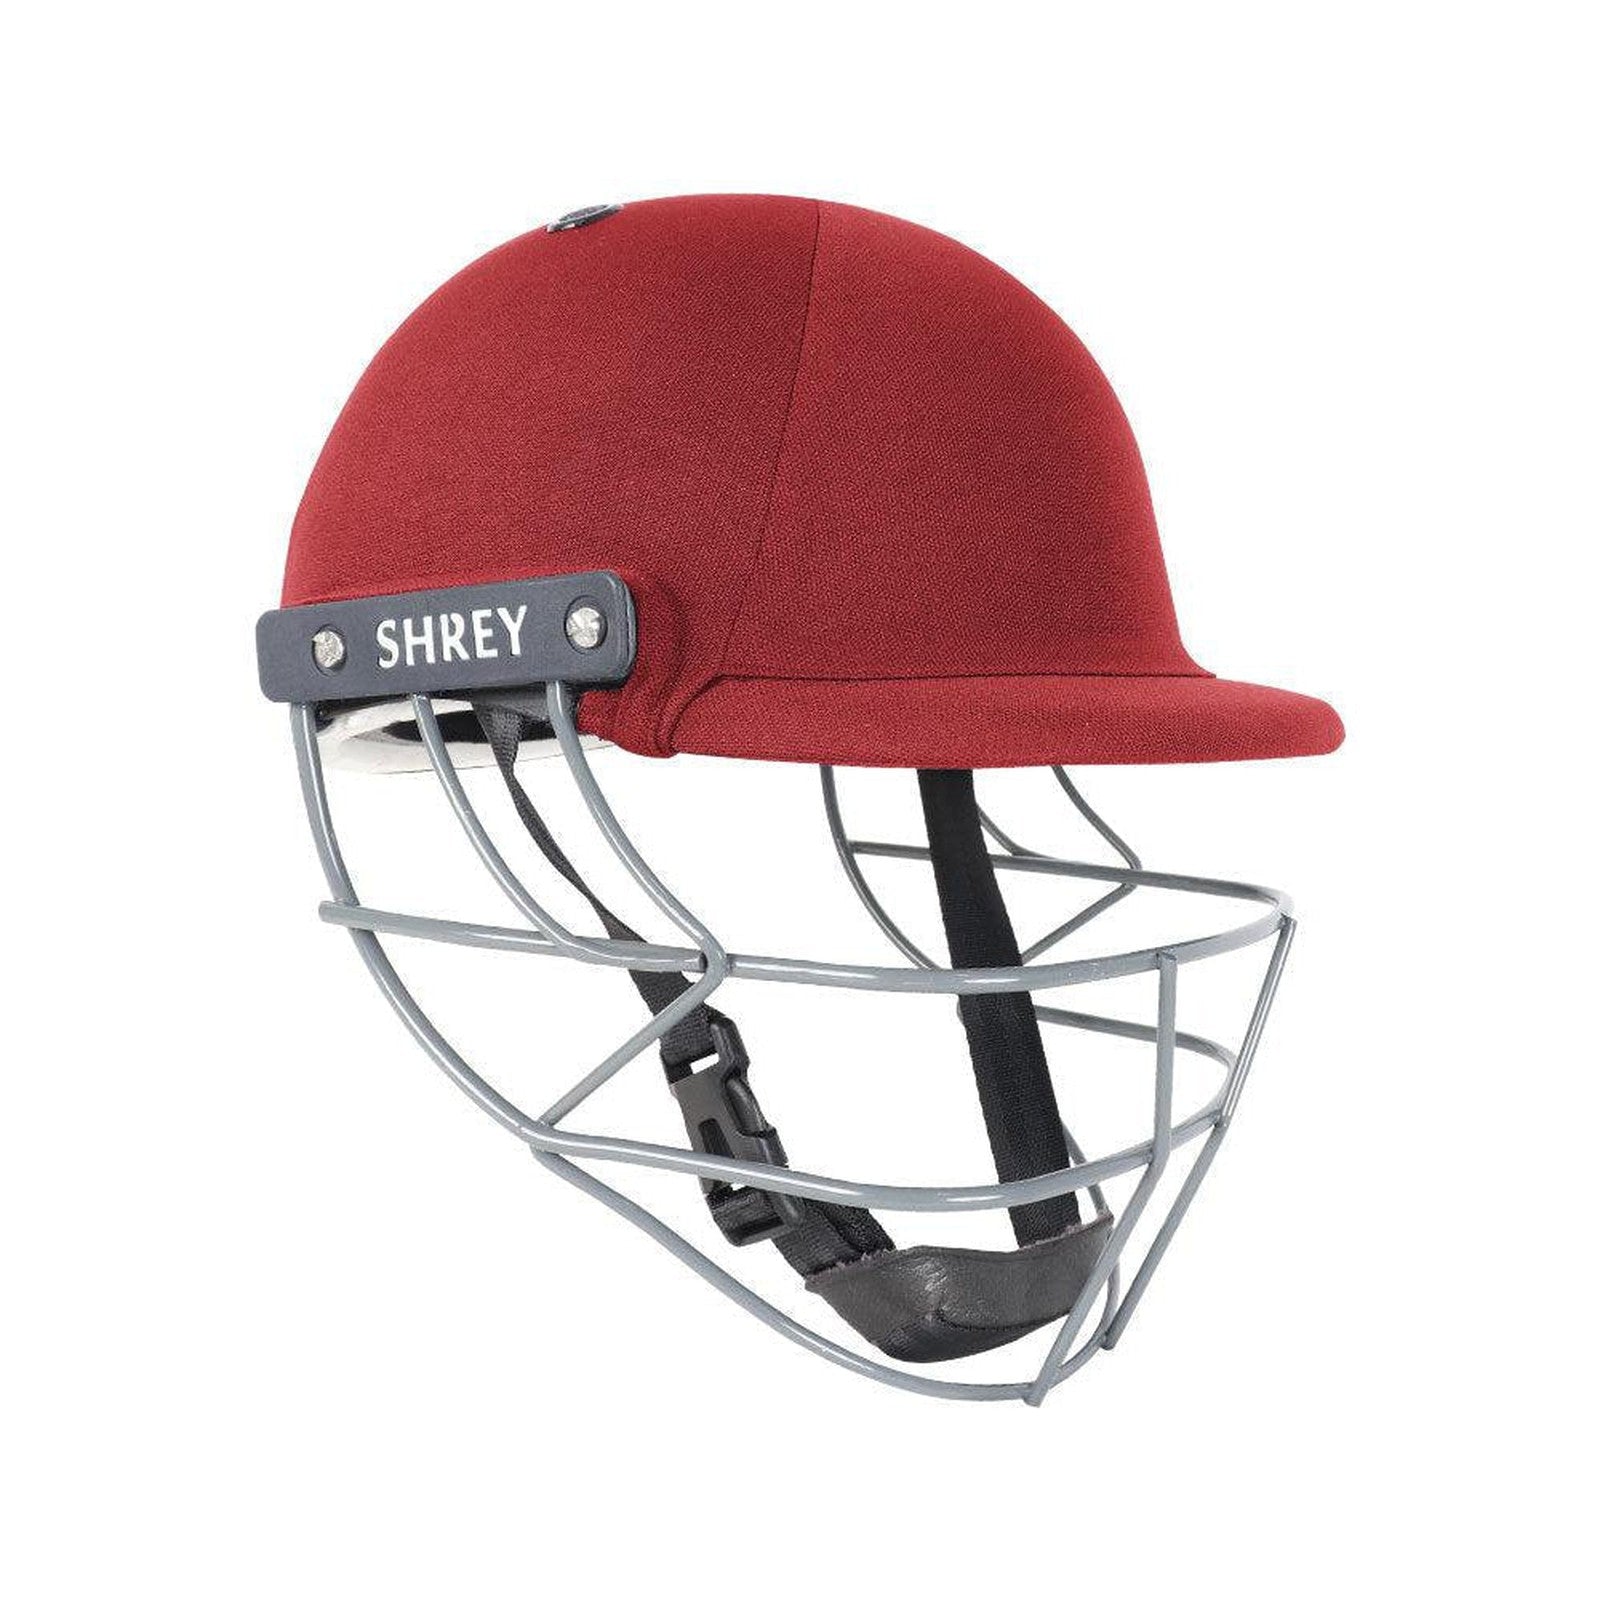 Shrey Performance 2.0 Cricket Helmet With Mild Steel - Maroon Youth